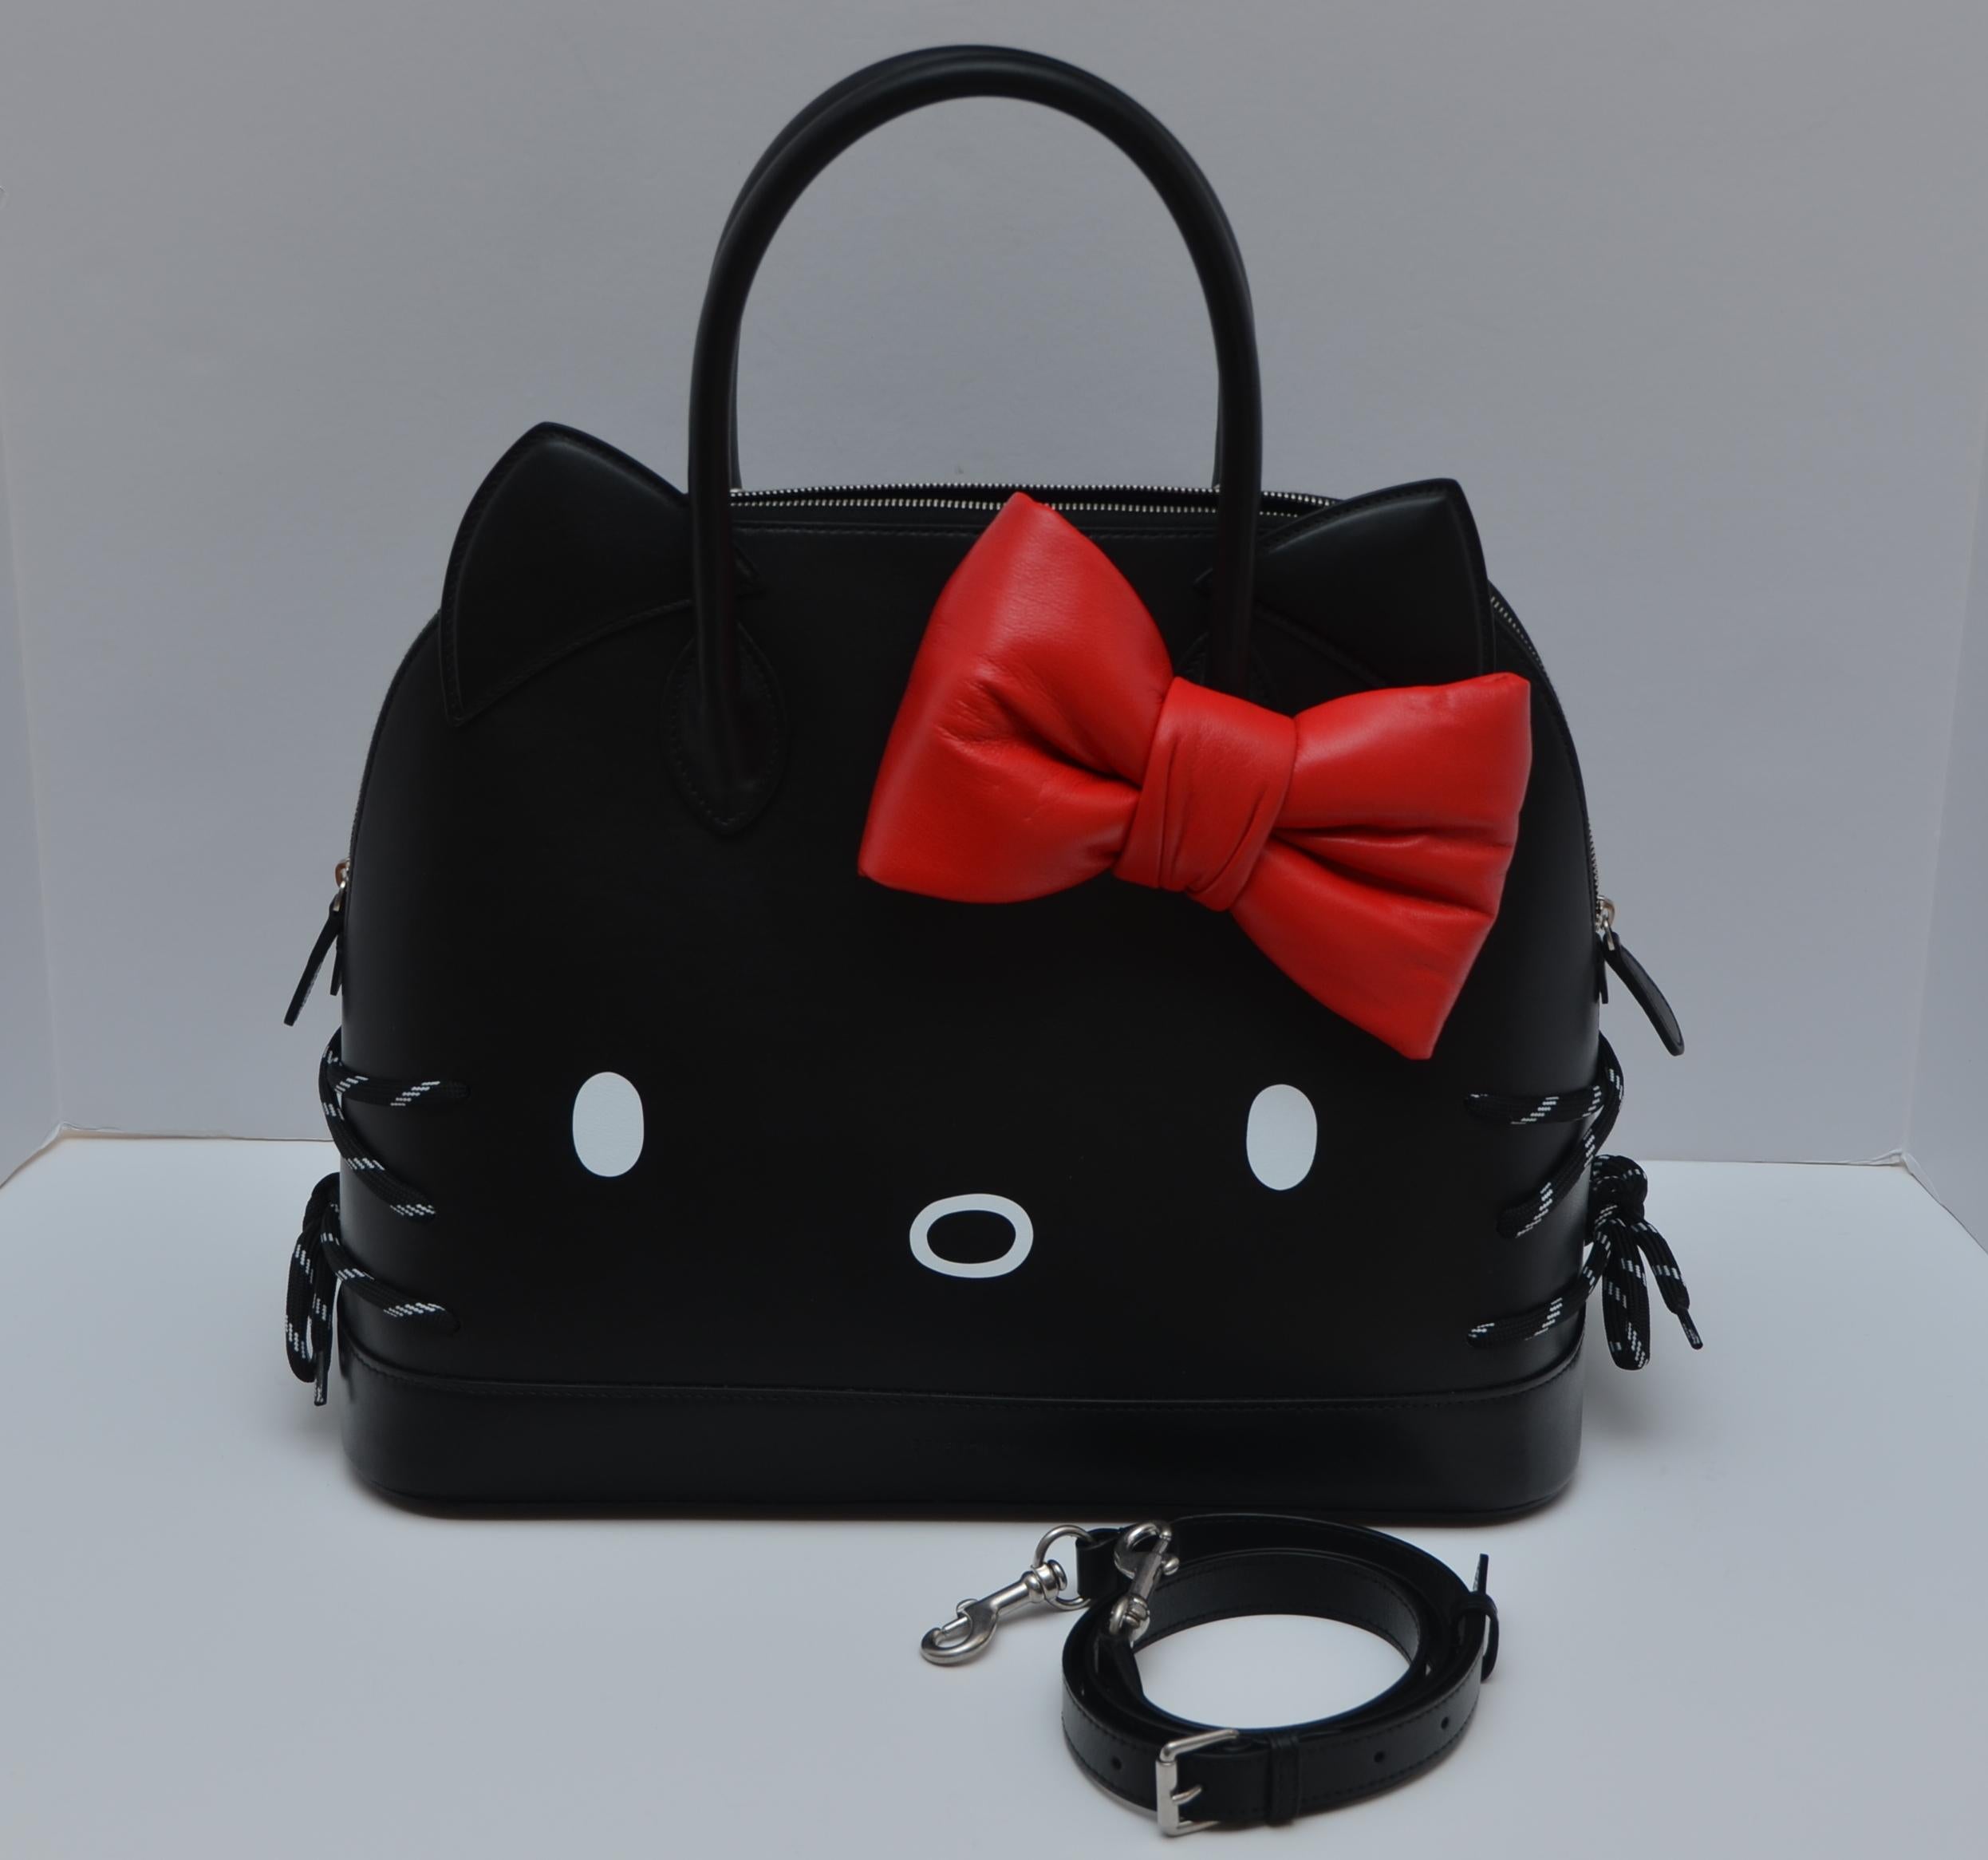 black hello kitty purse